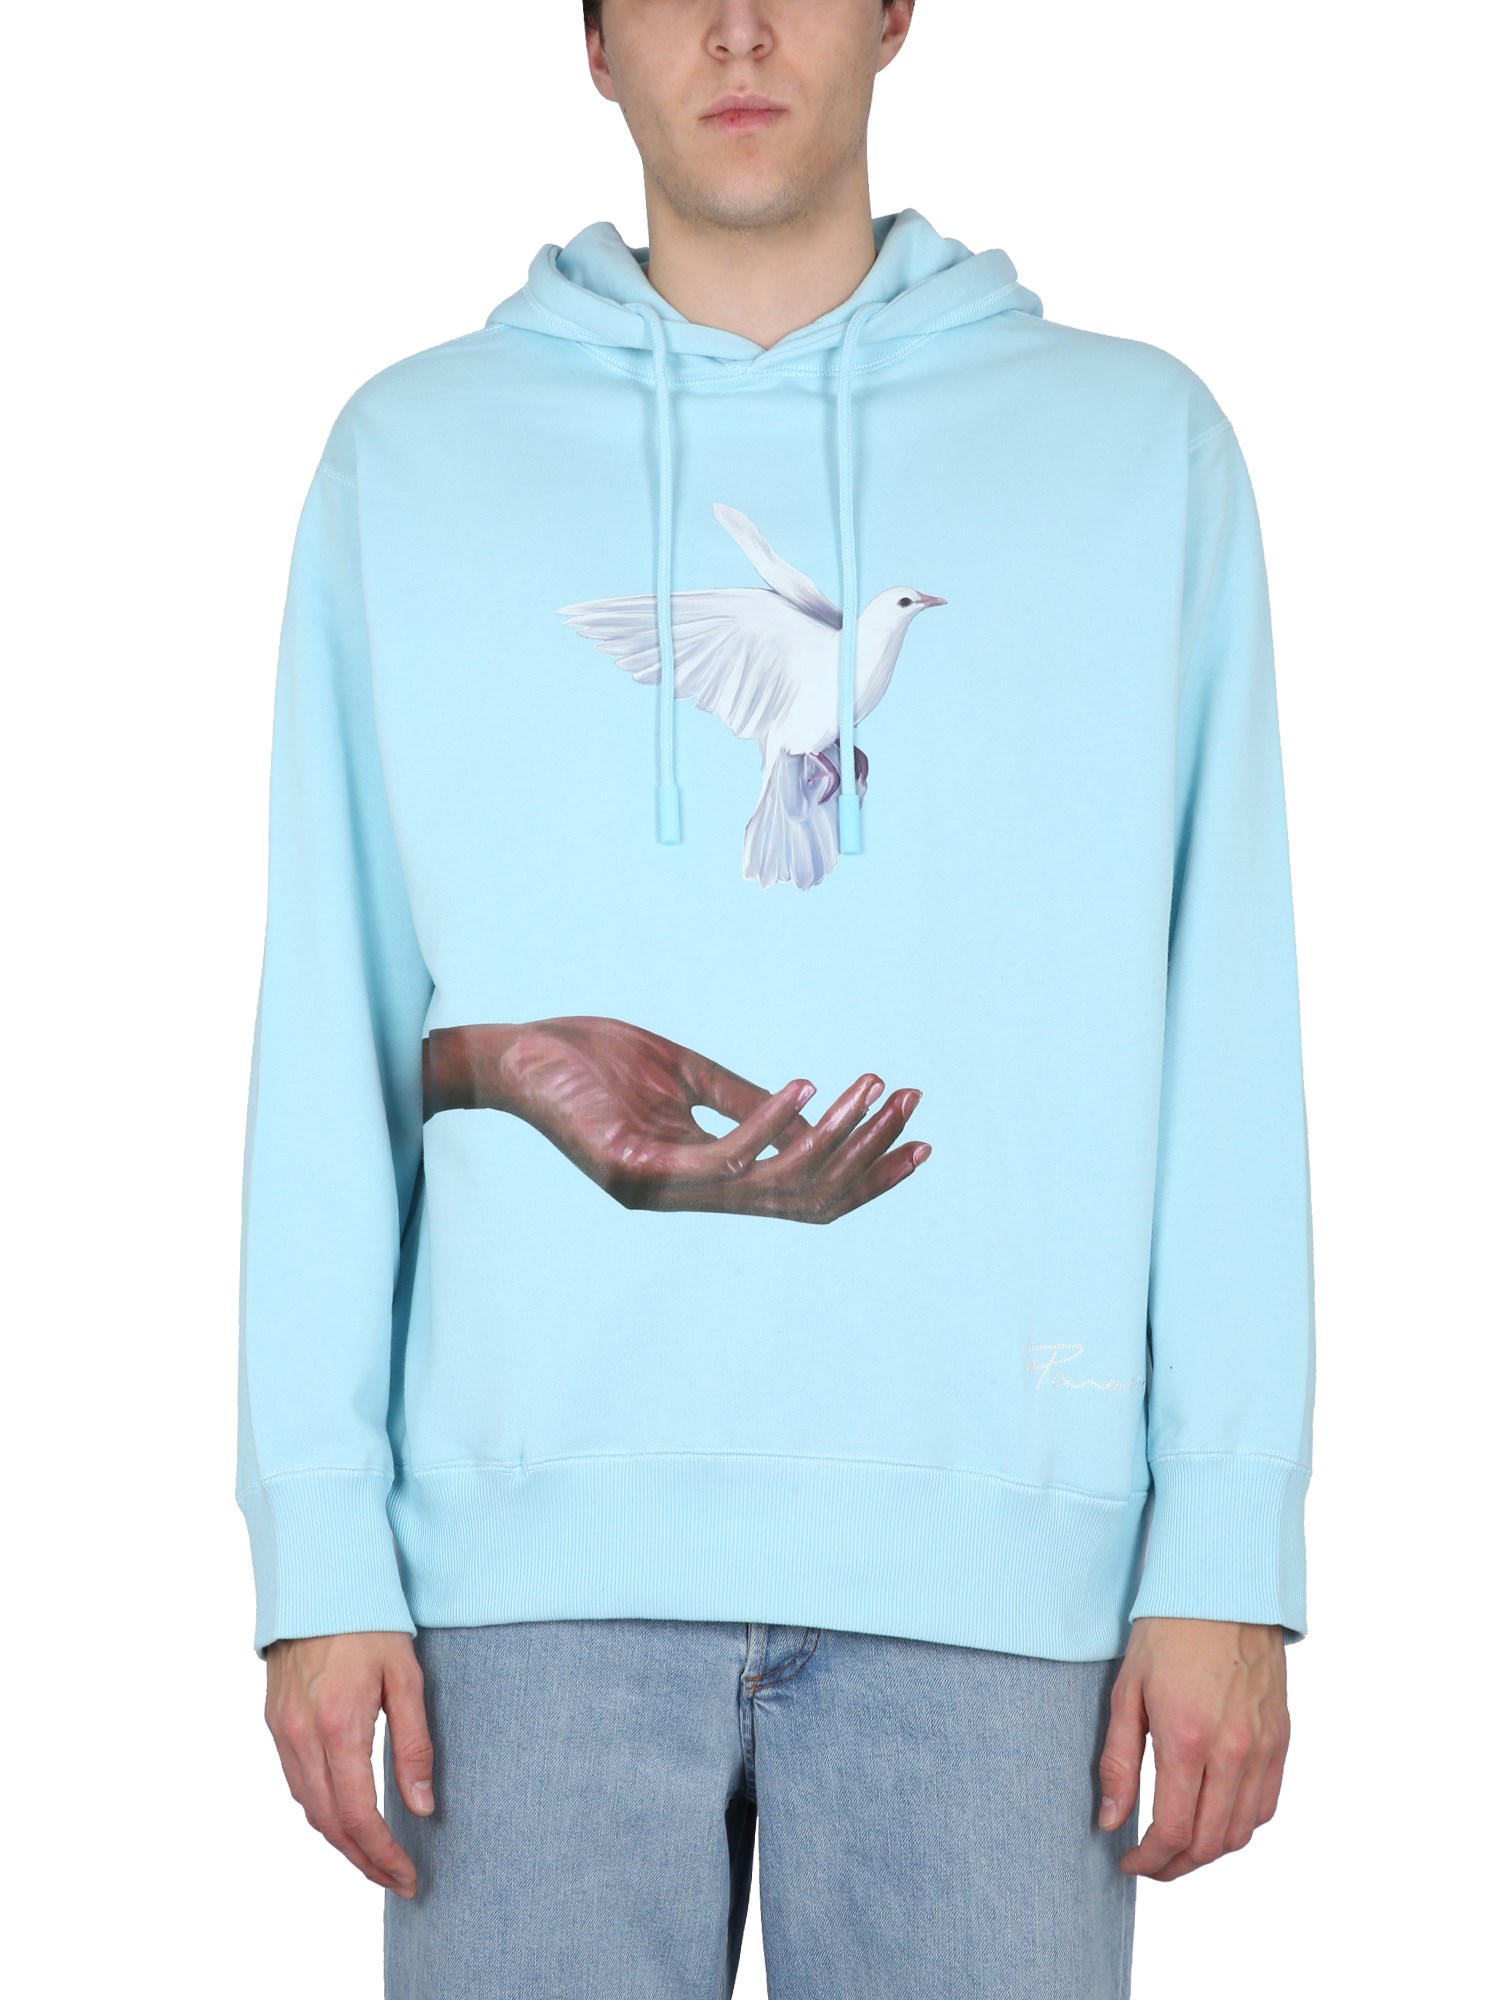 3.paradis 3.paradis hand and dove sweatshirt